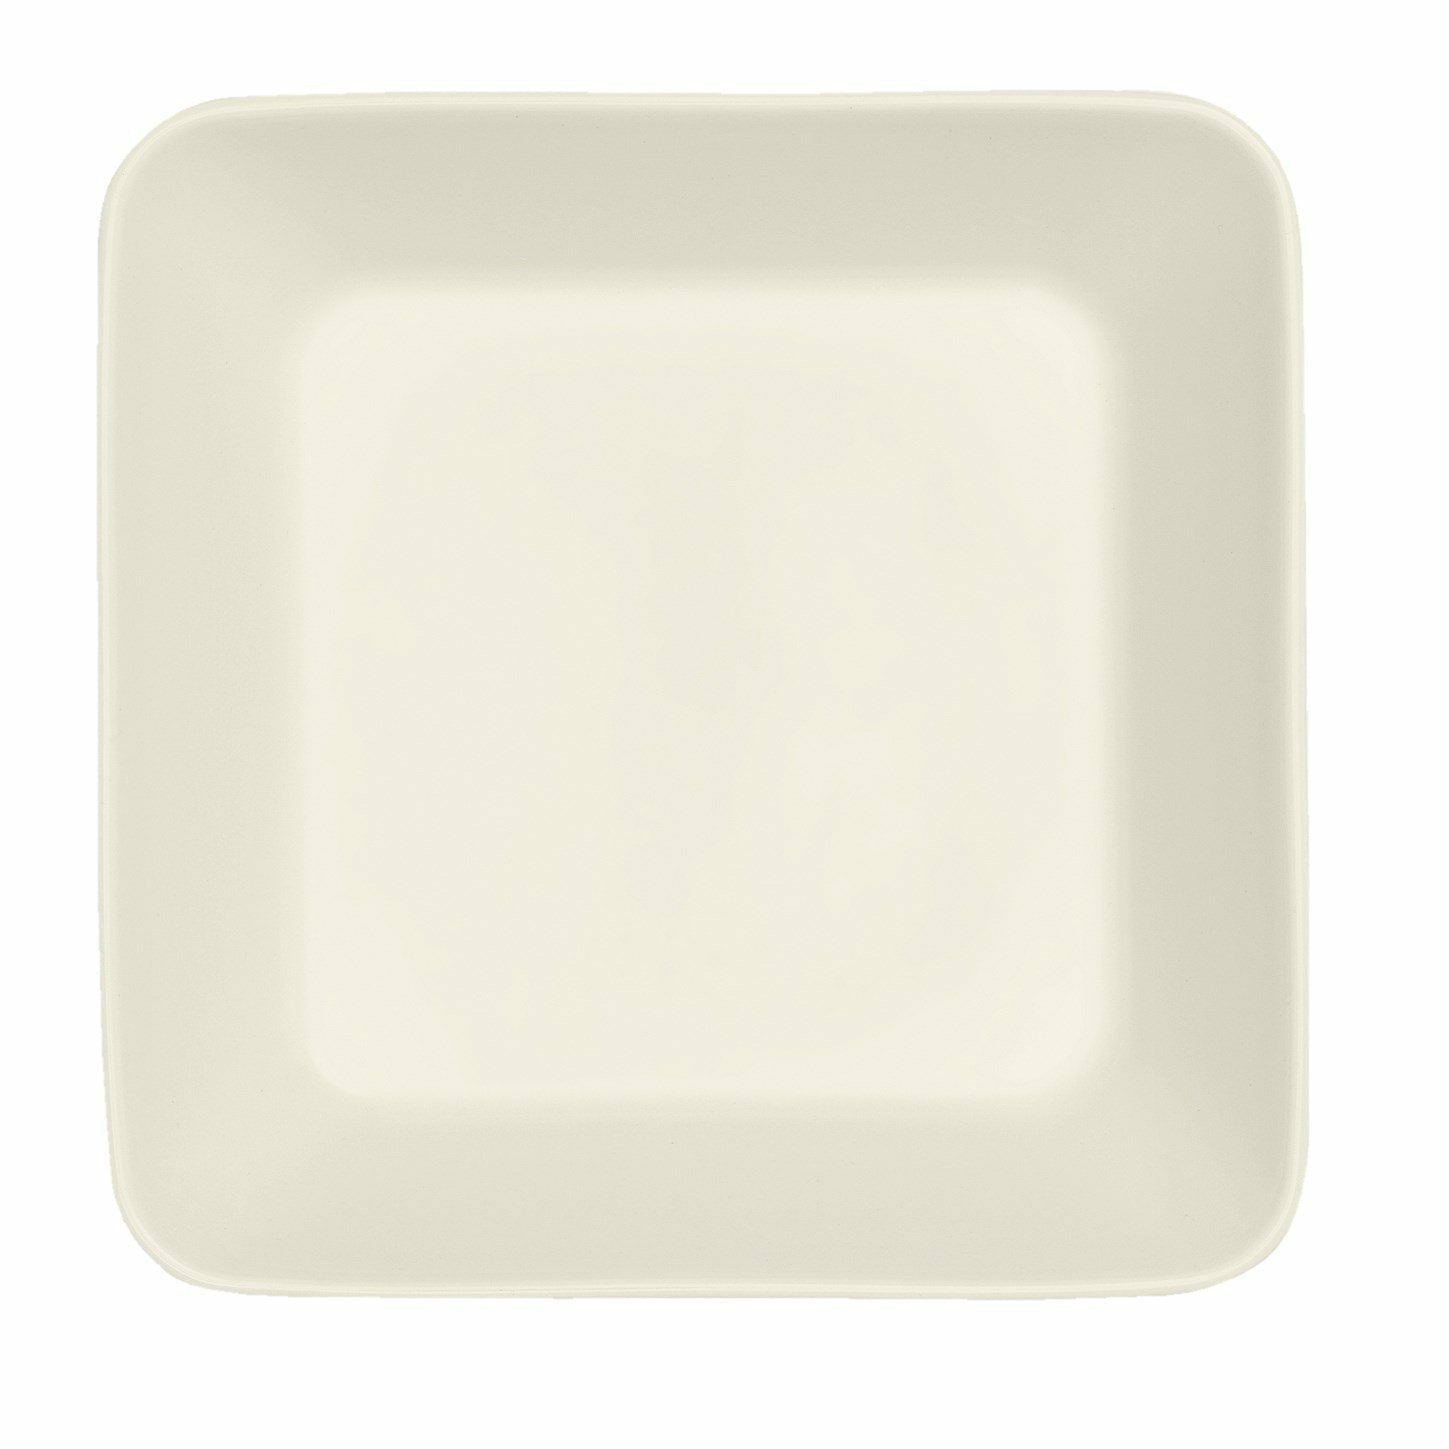 Iittala Teema Bowls White, 16x16cm